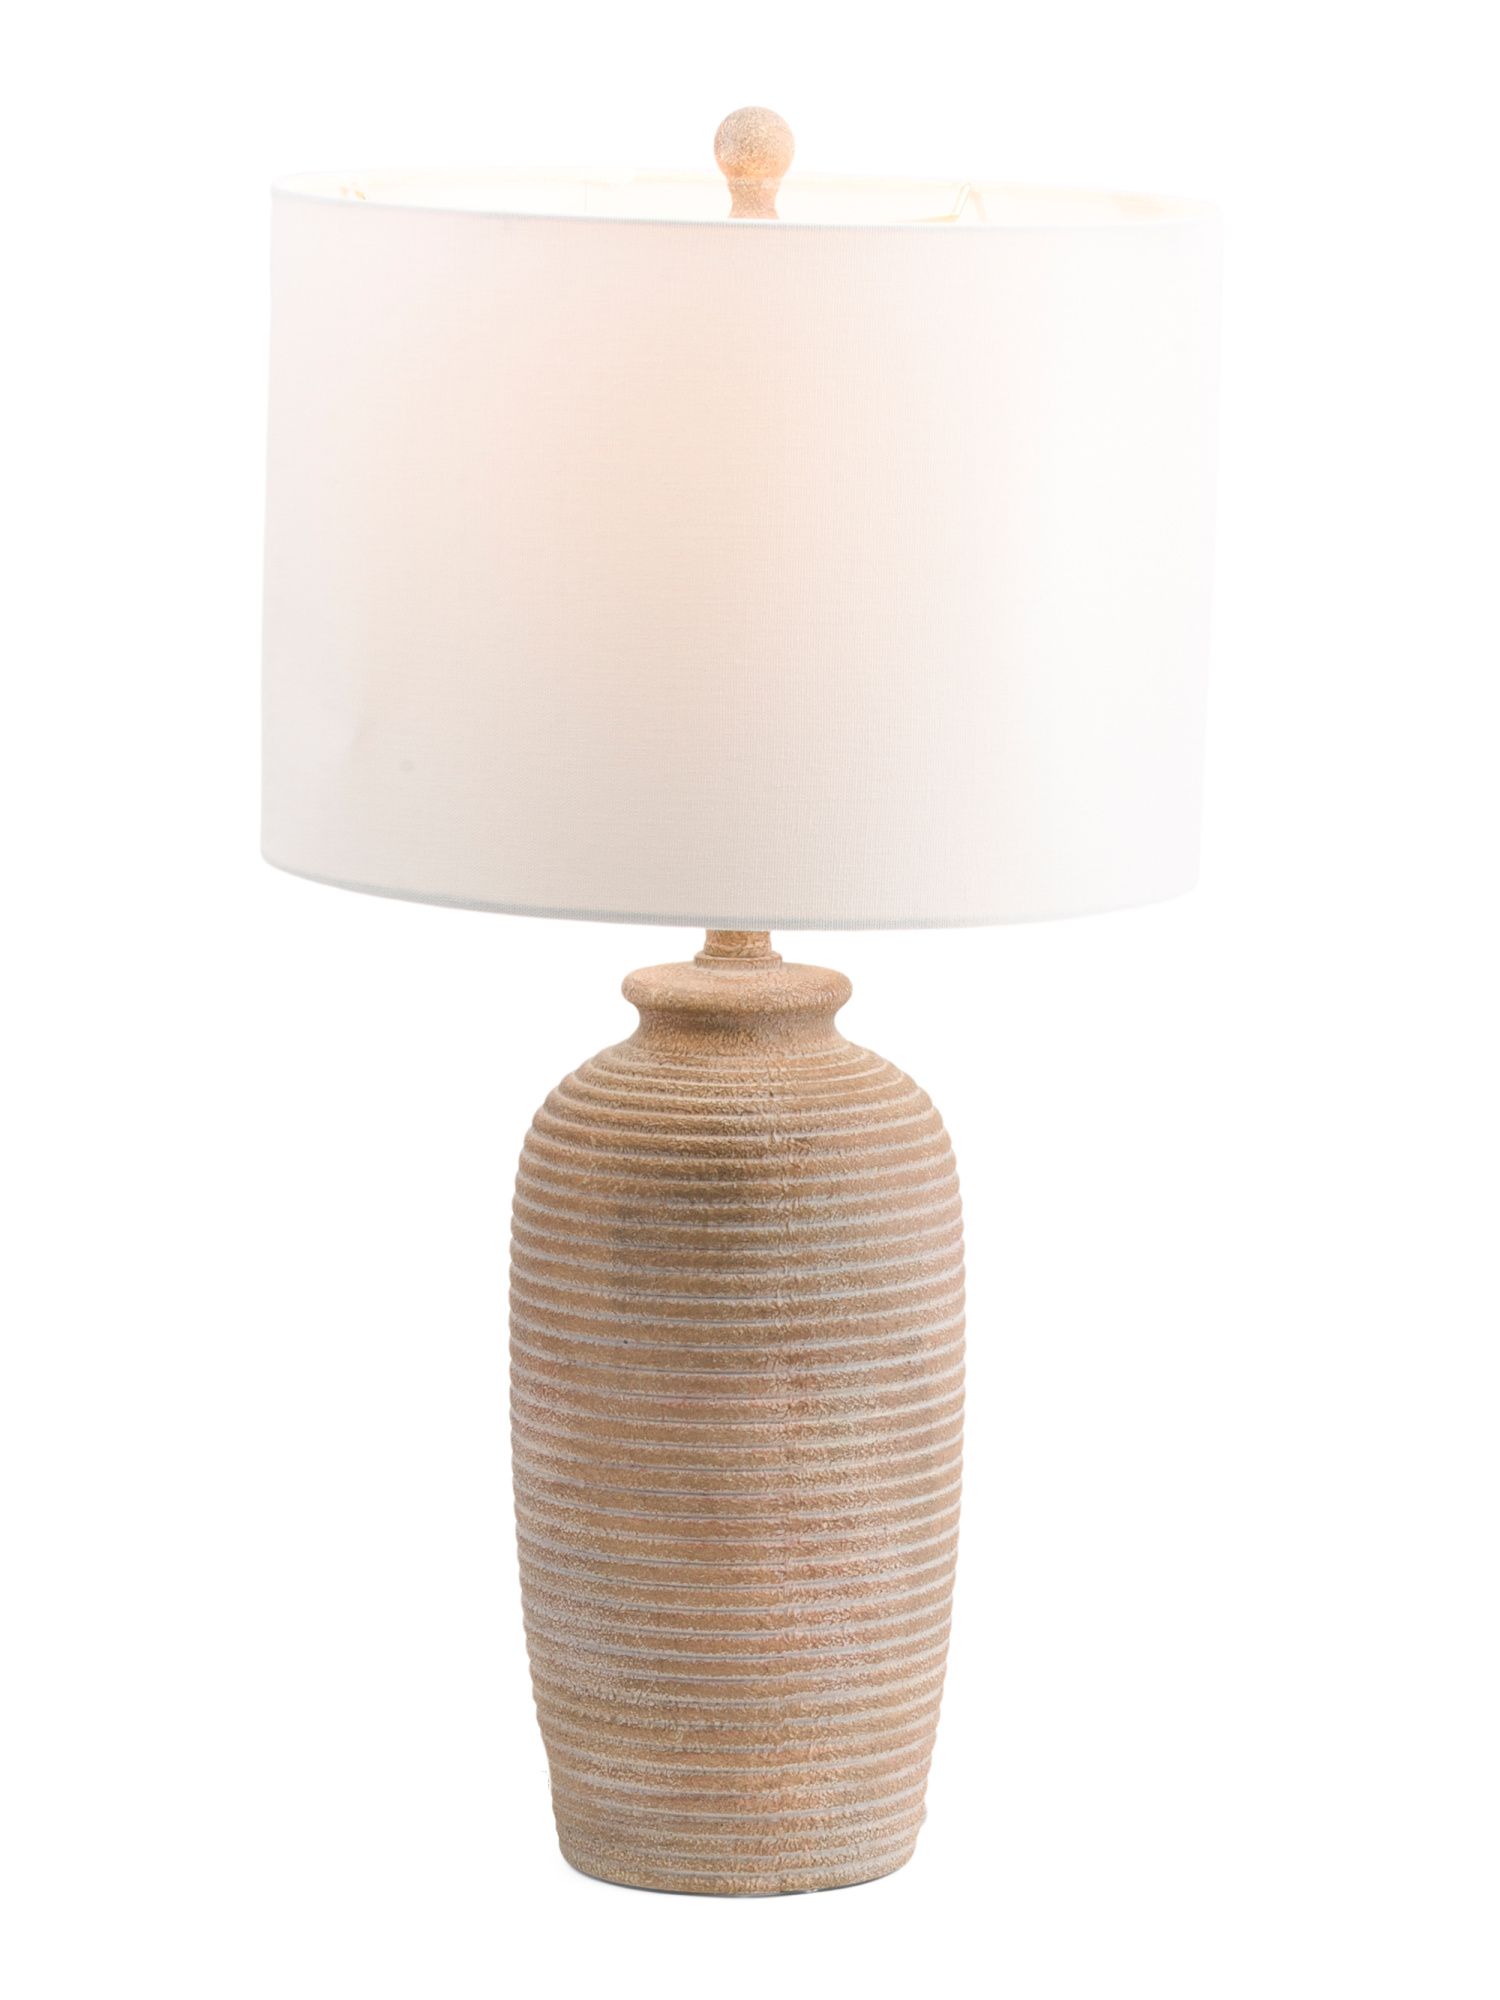 Kensen Table Lamp | TJ Maxx